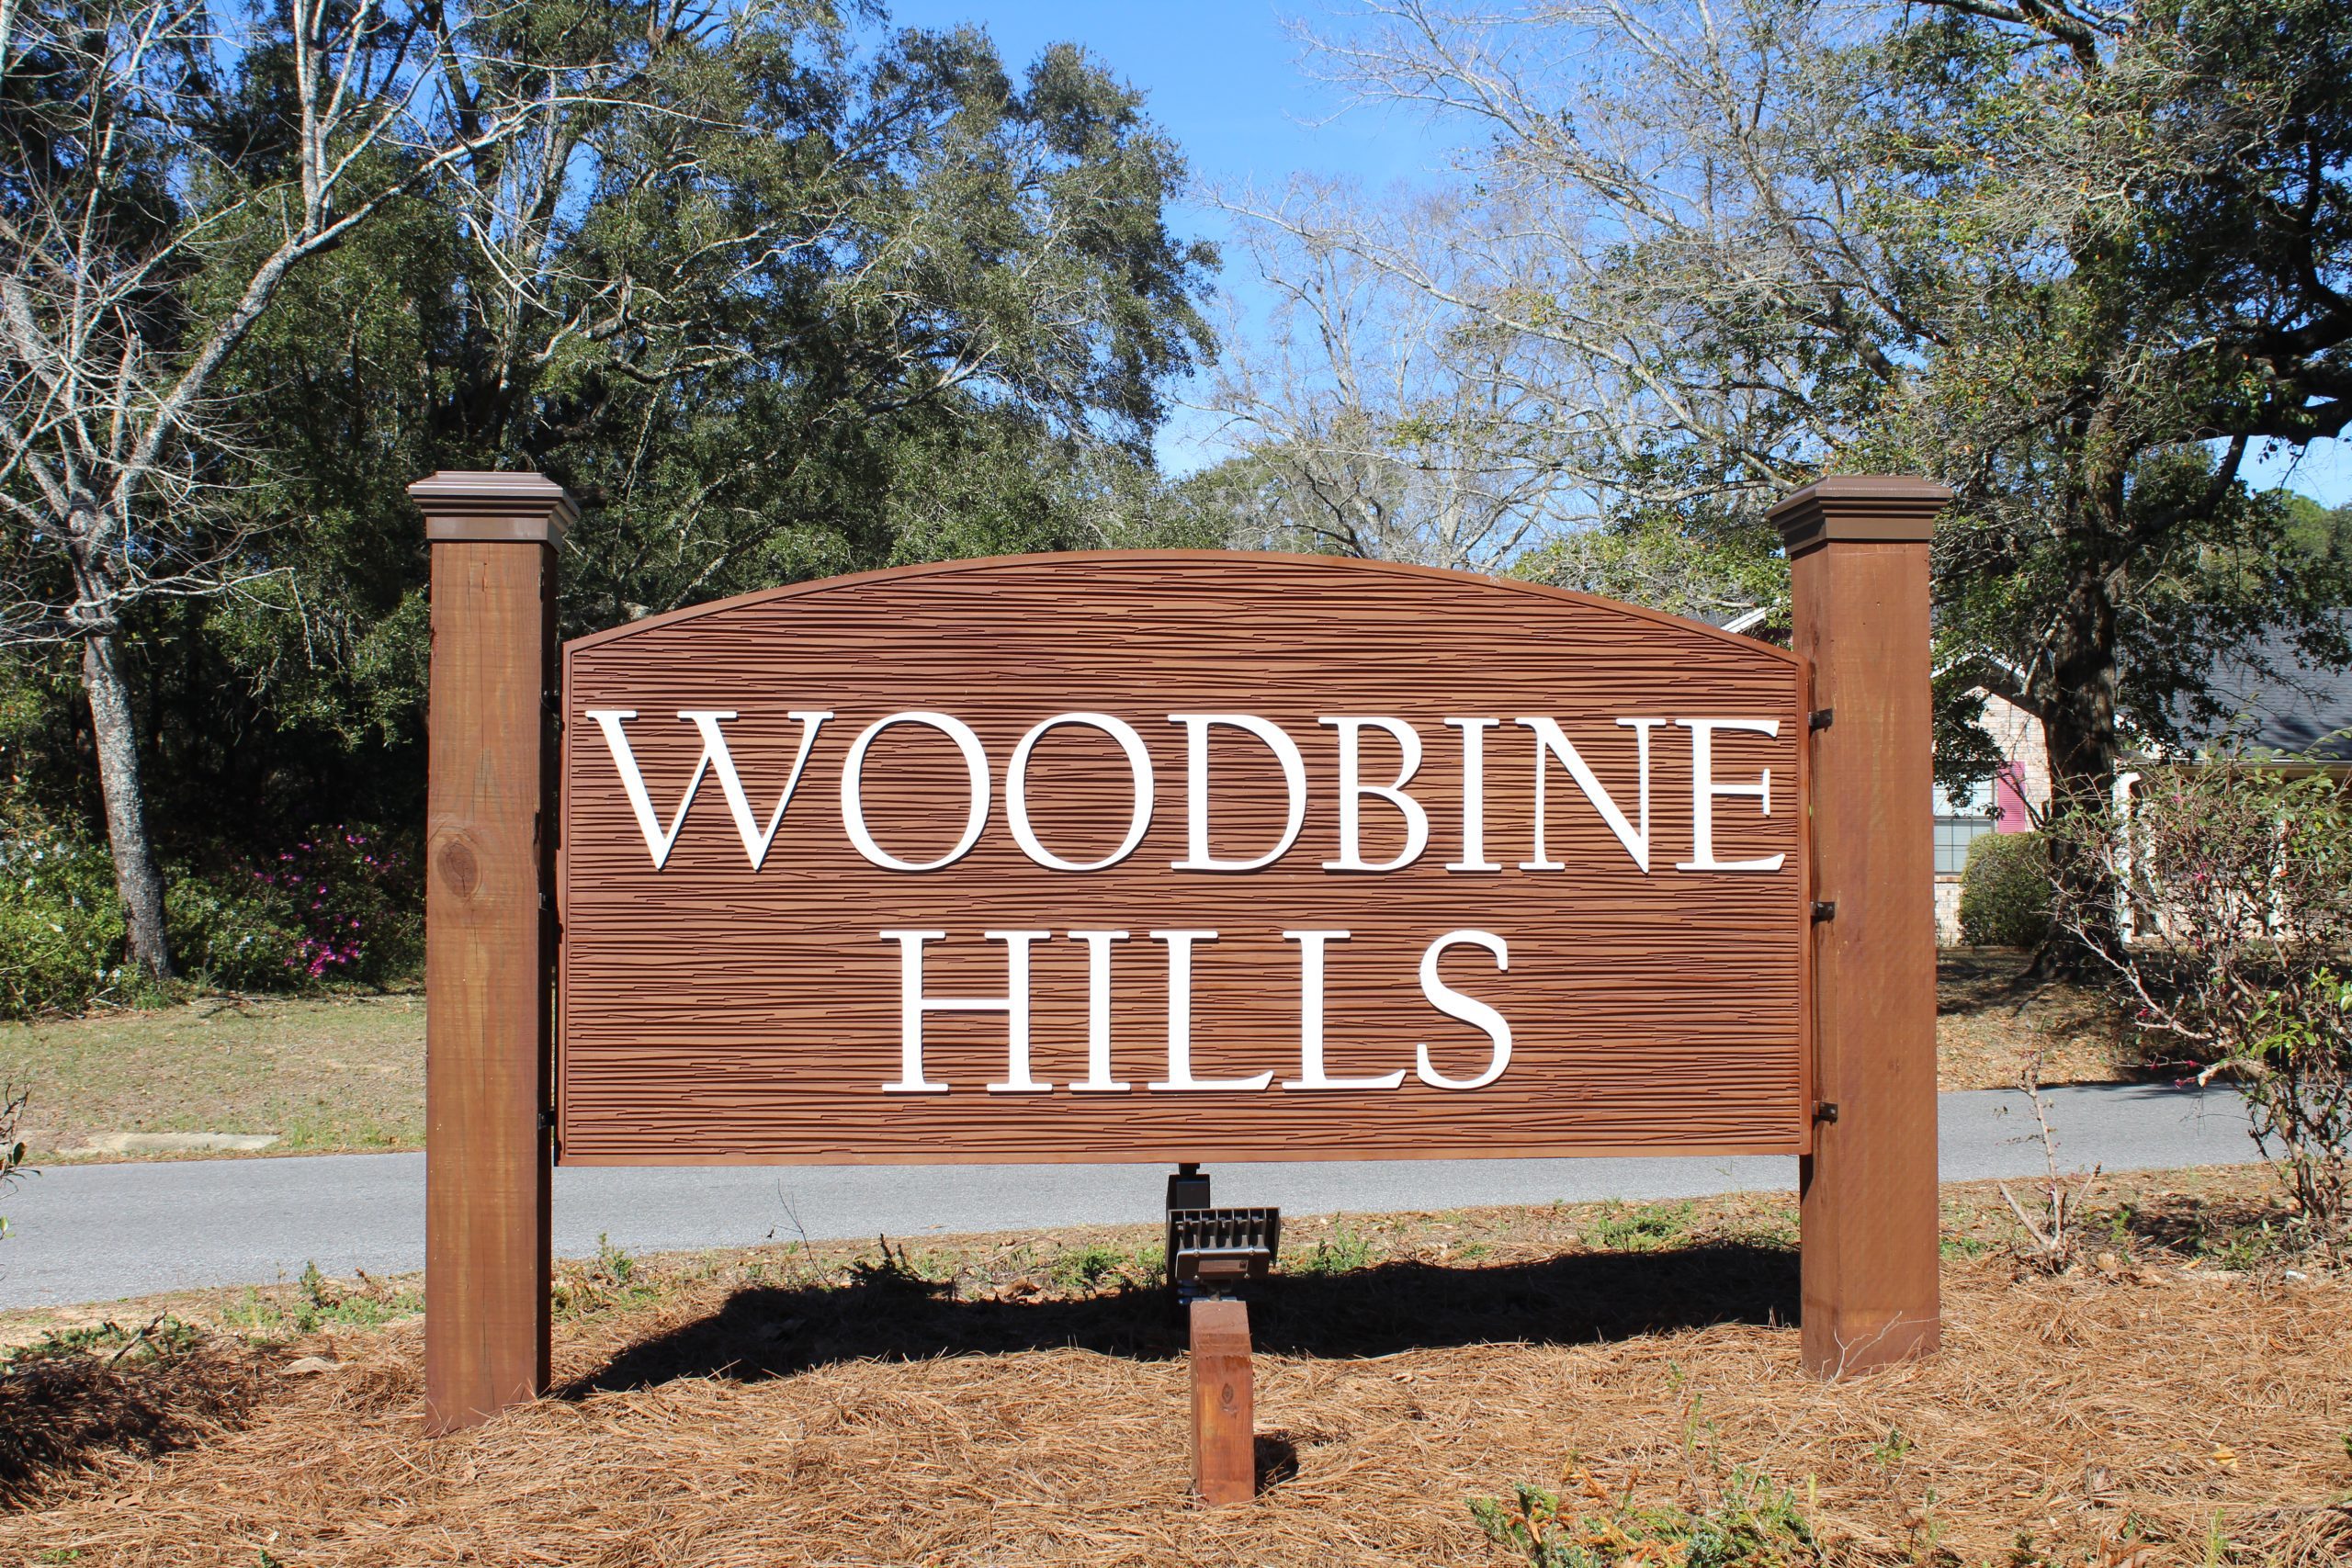 Woodbine Hills, Pace, FL